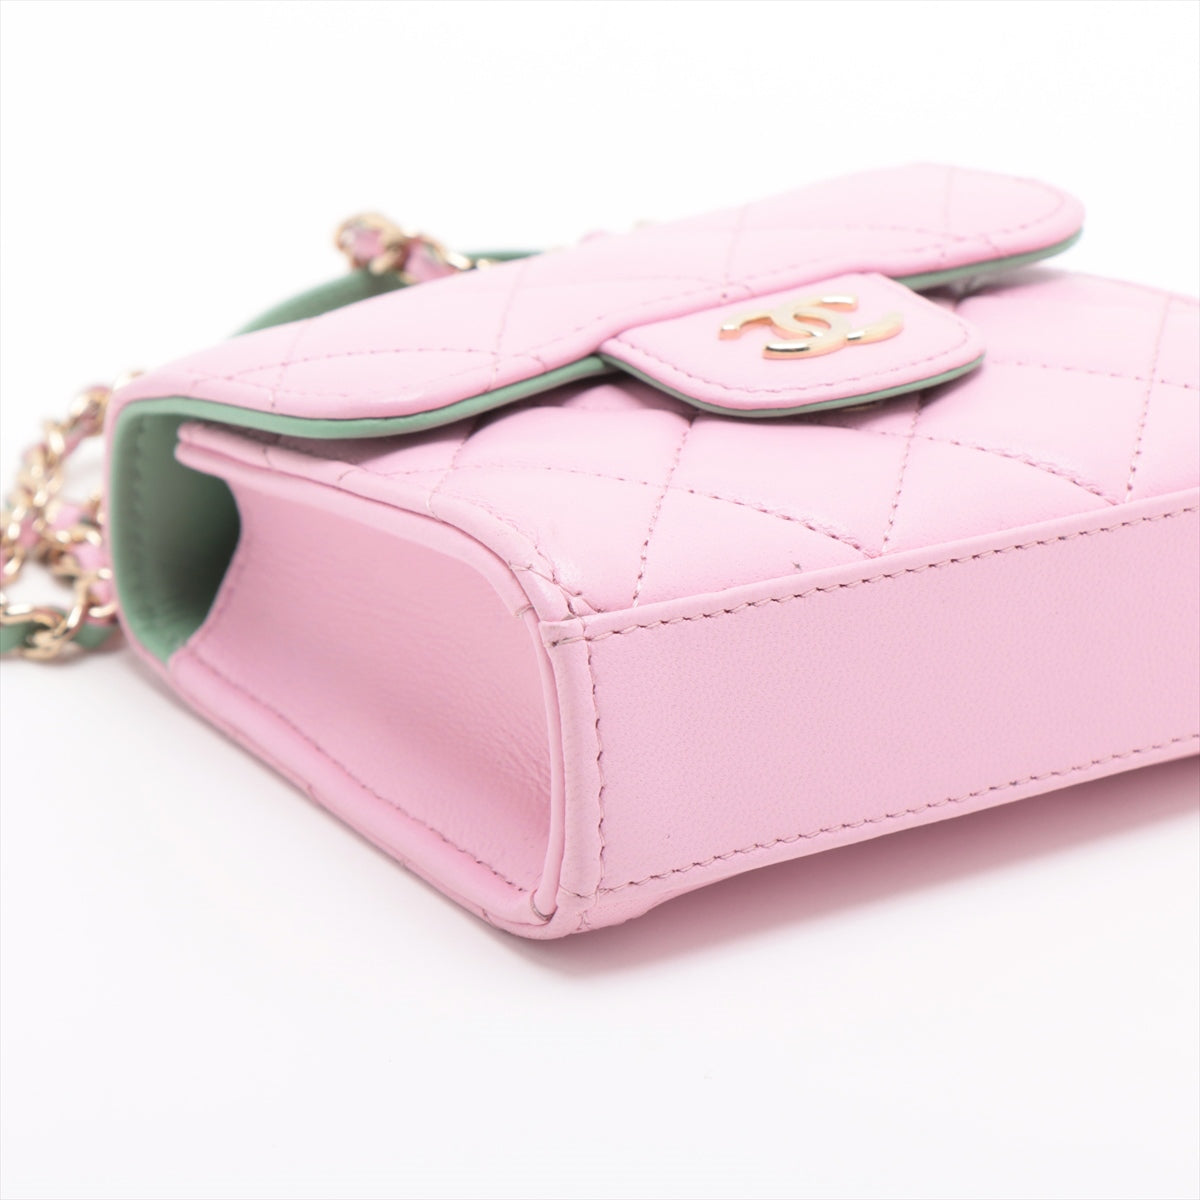 Chanel Mini Mini Matelasse Ram leather Chain shoulder bag Clutch bag Pink x green Gold Metal fittings